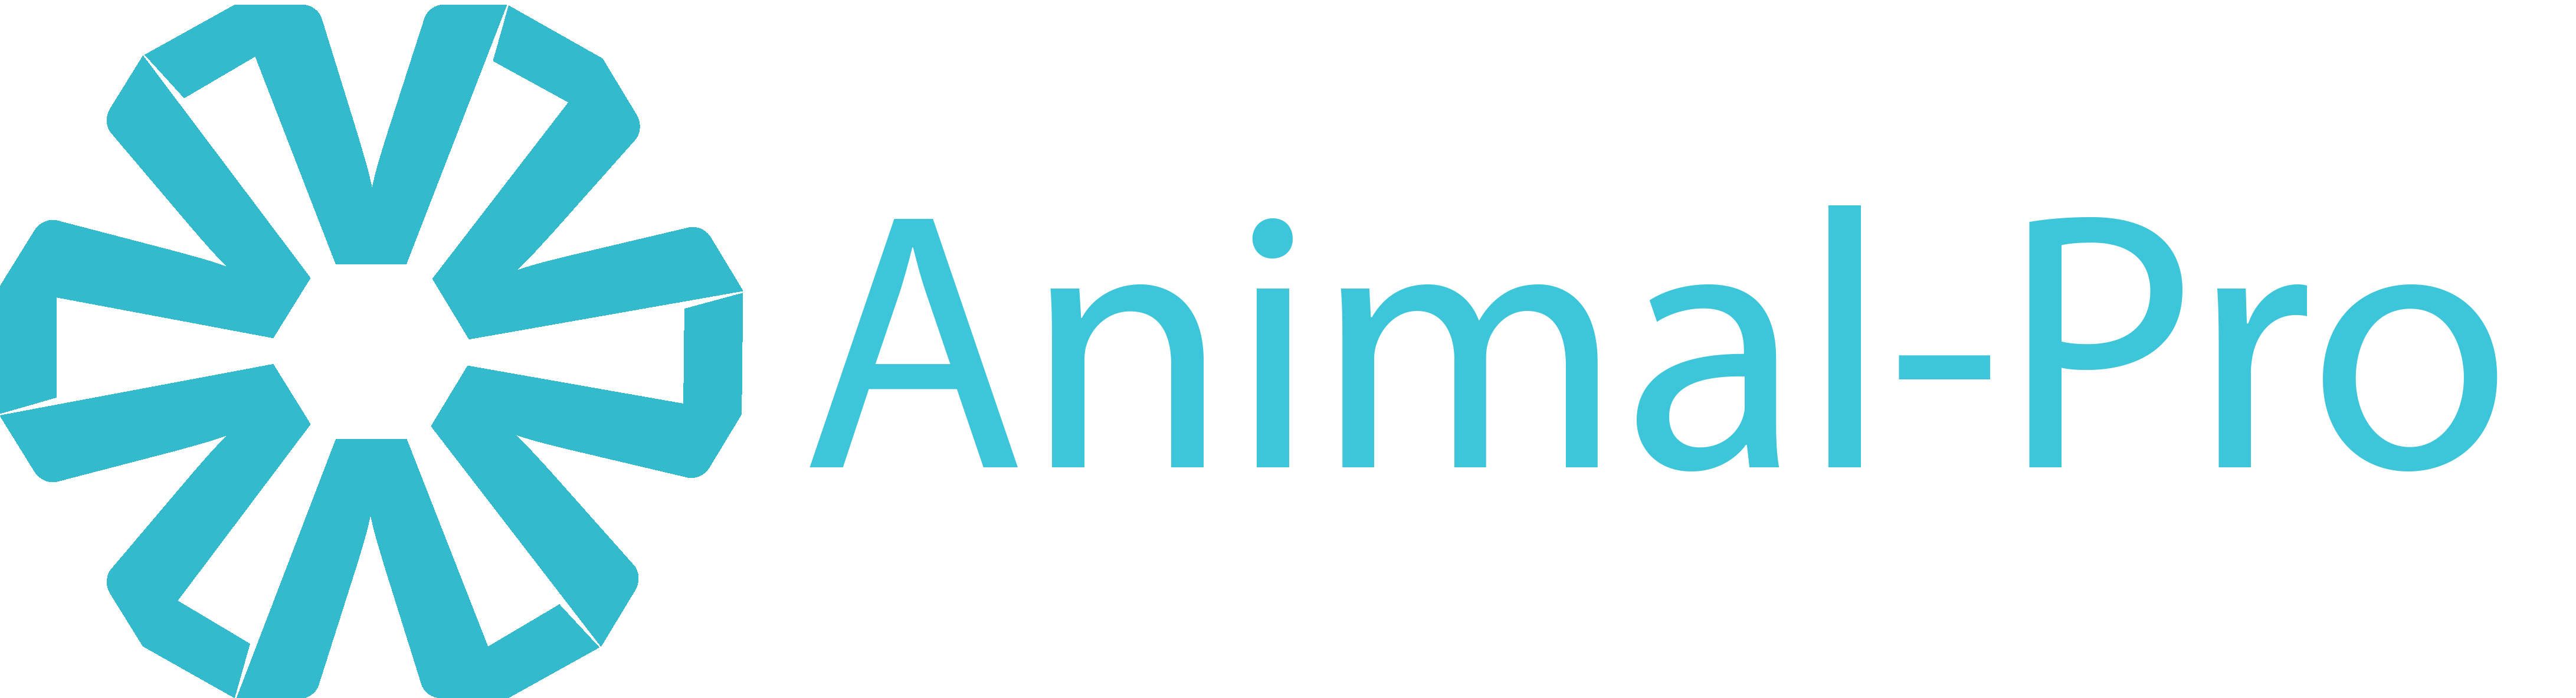 Animal-Pro